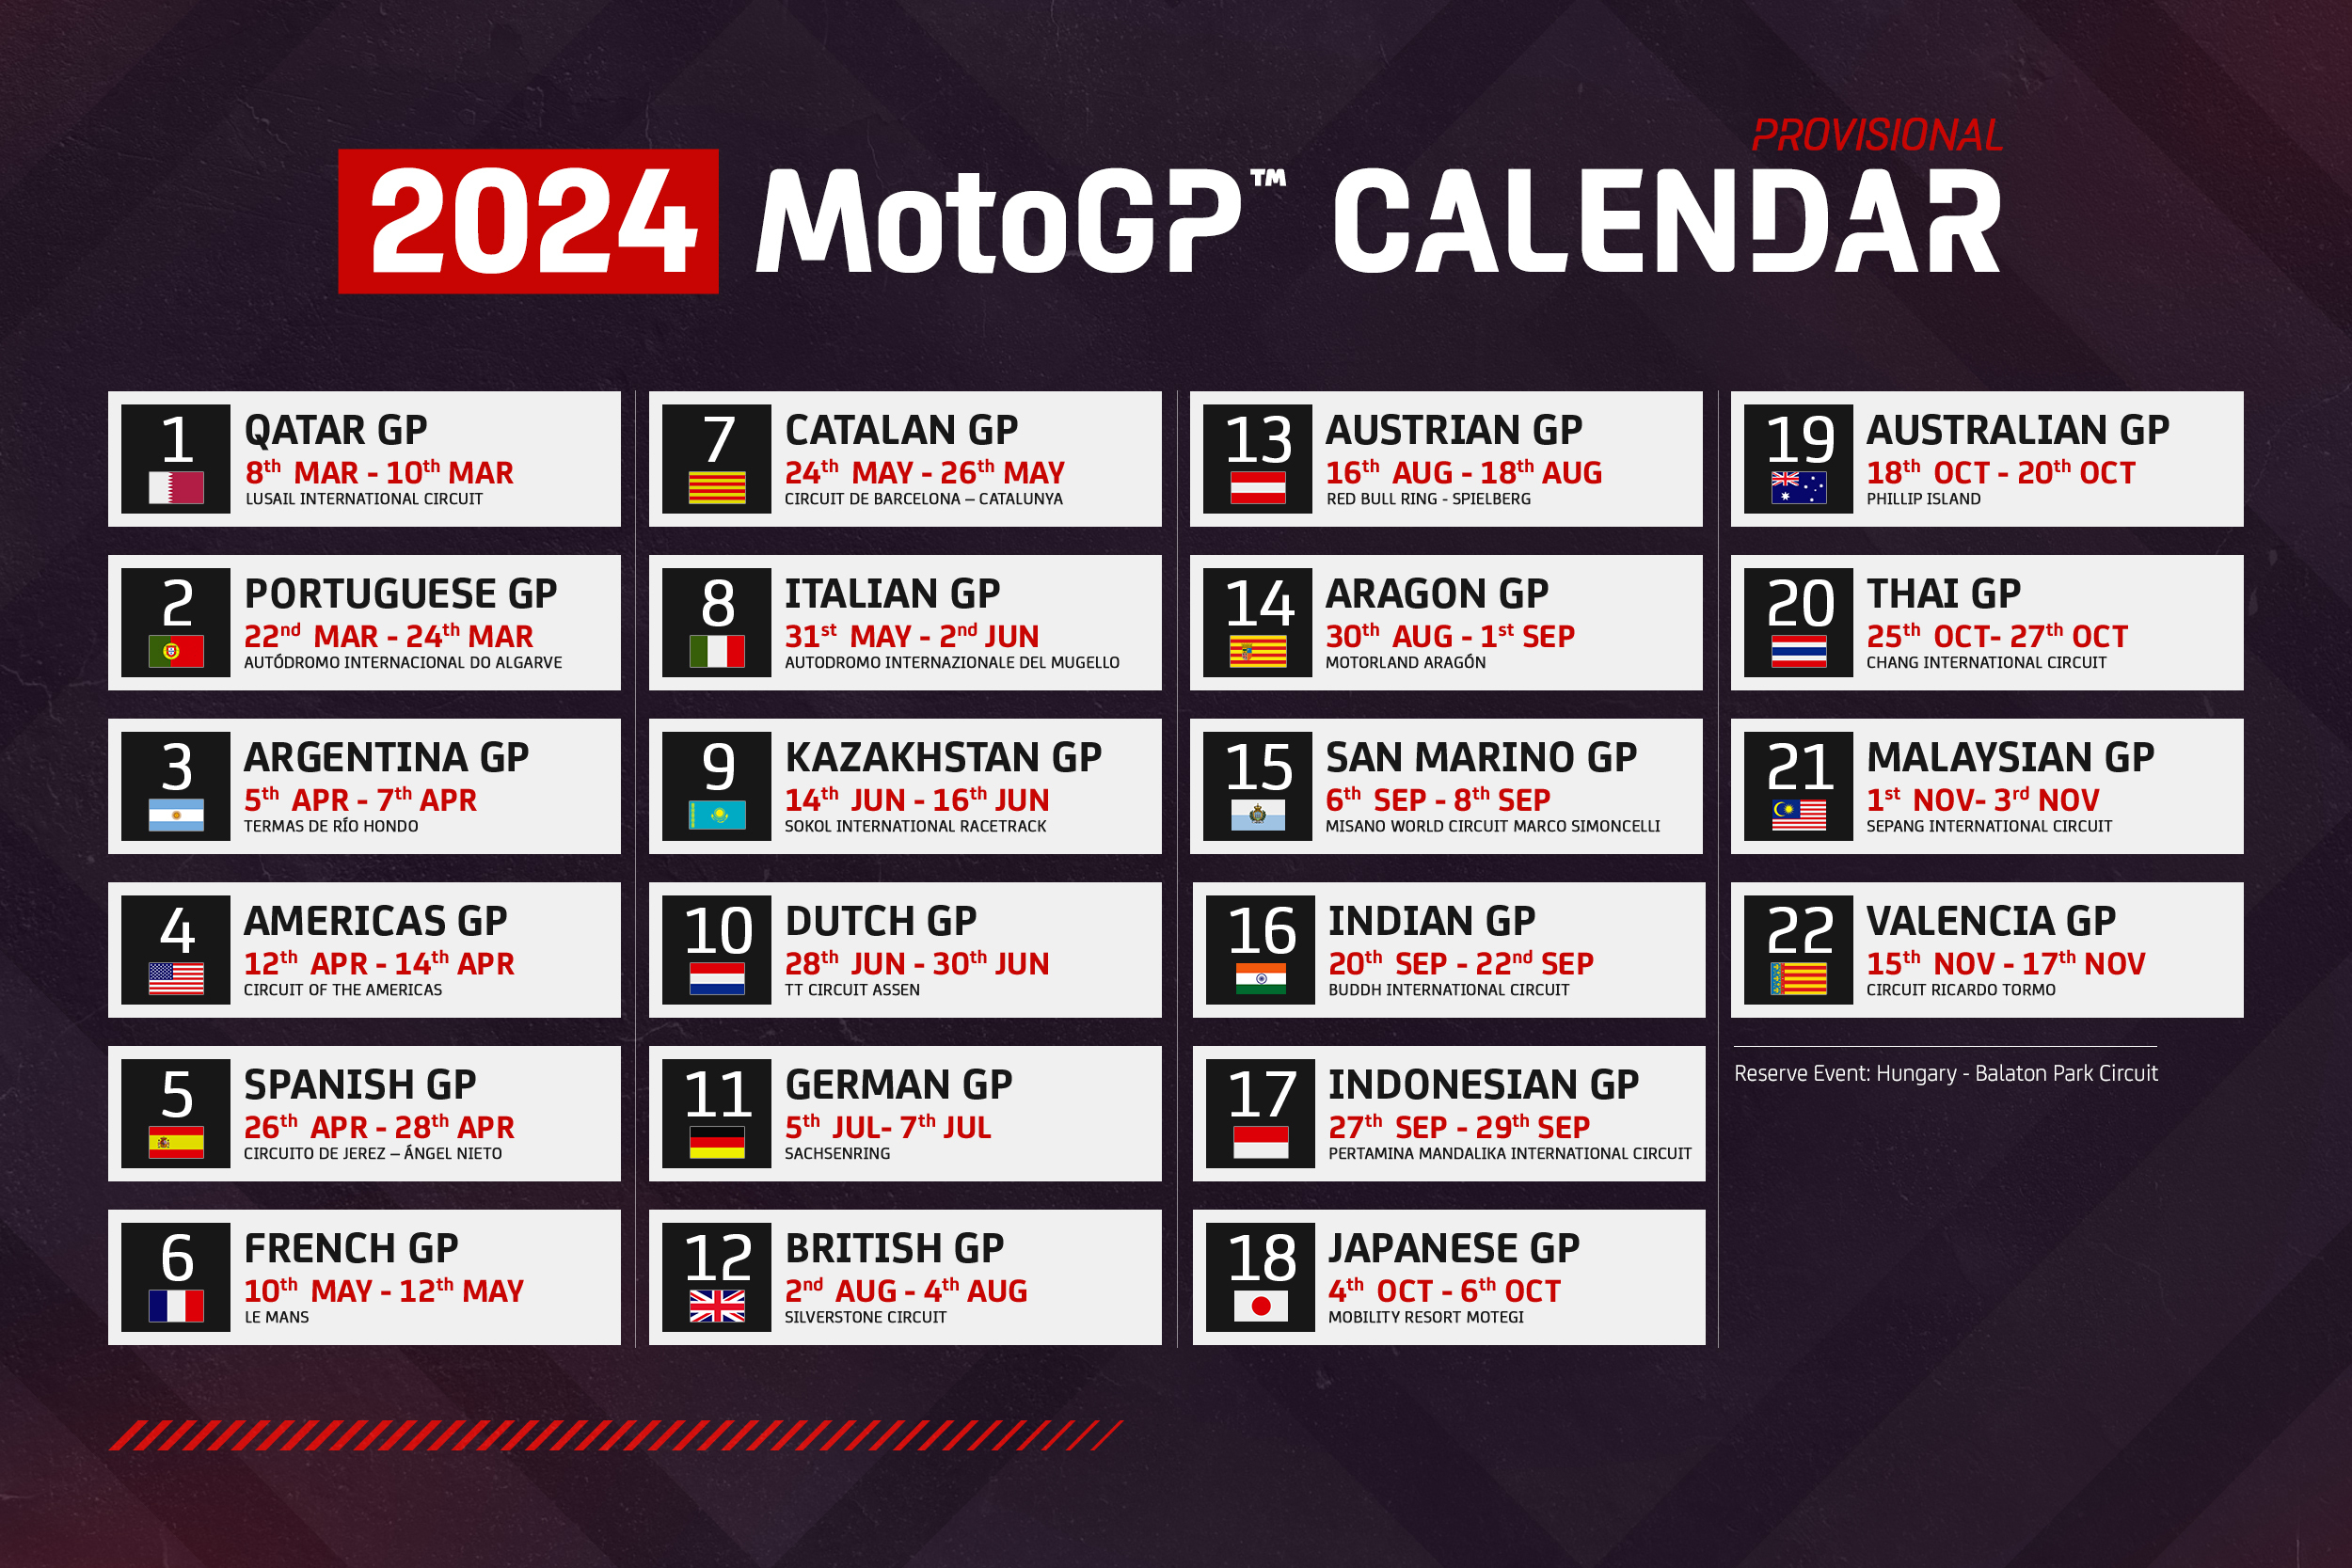 2024 MotoGP Provisional Calendar